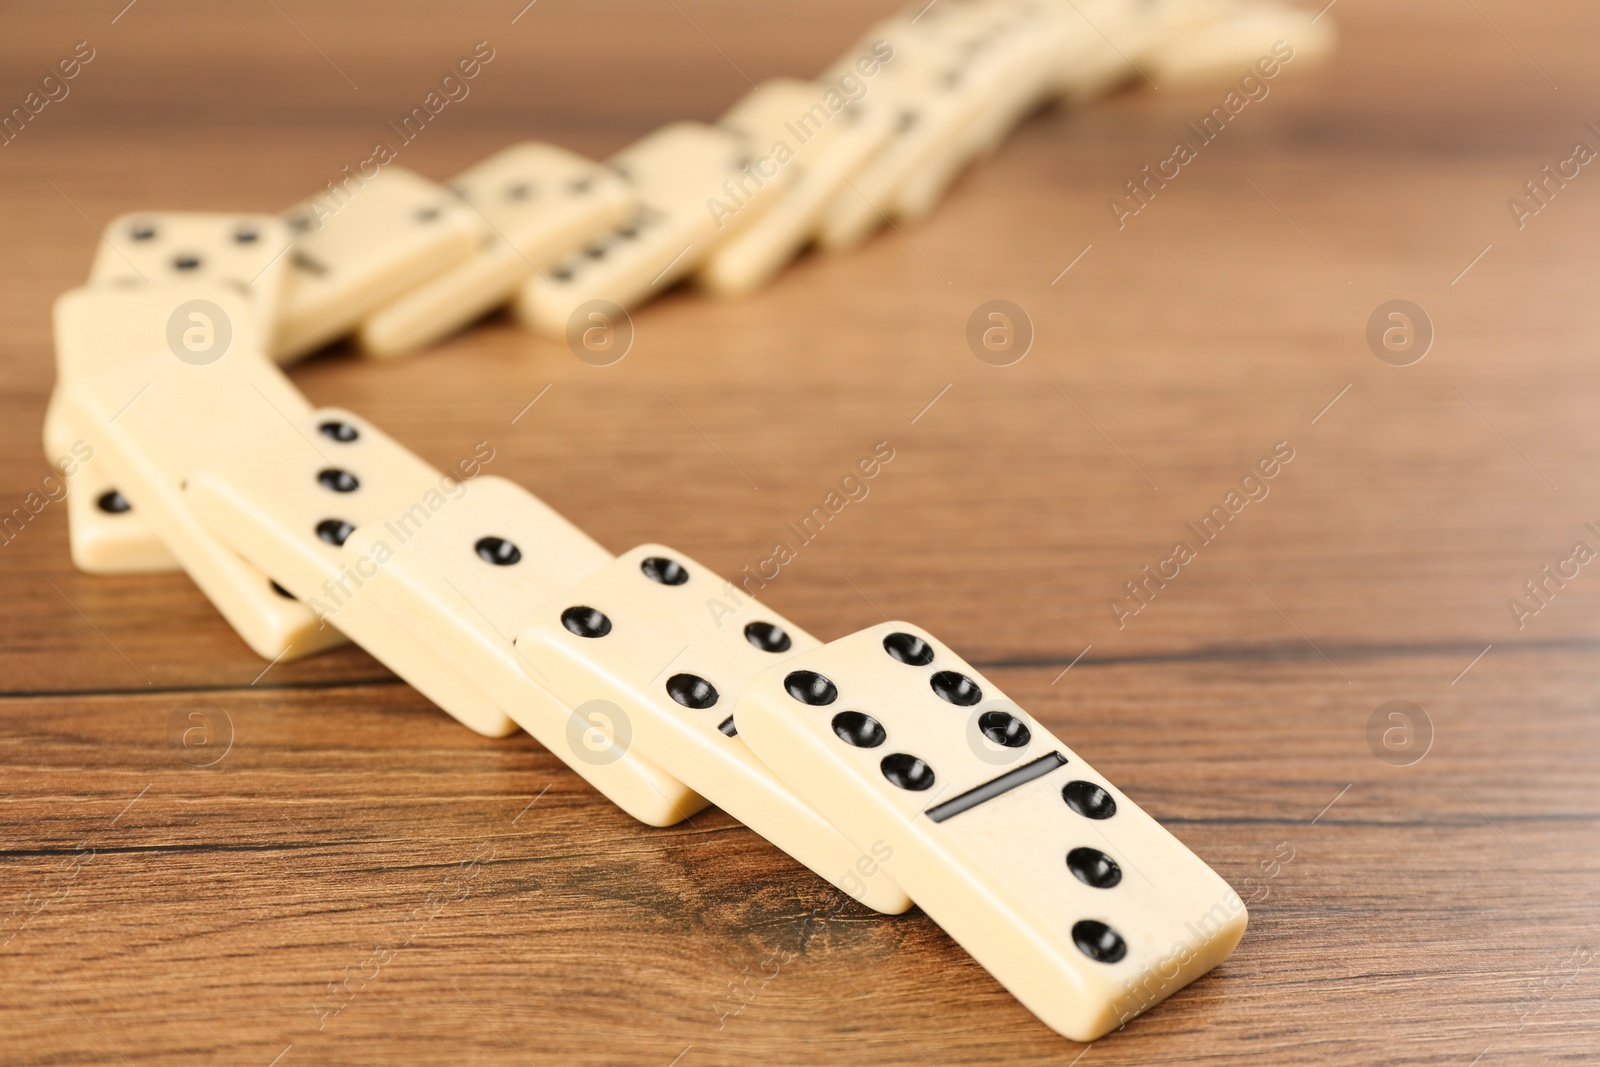 Photo of Fallen white domino tiles on wooden table